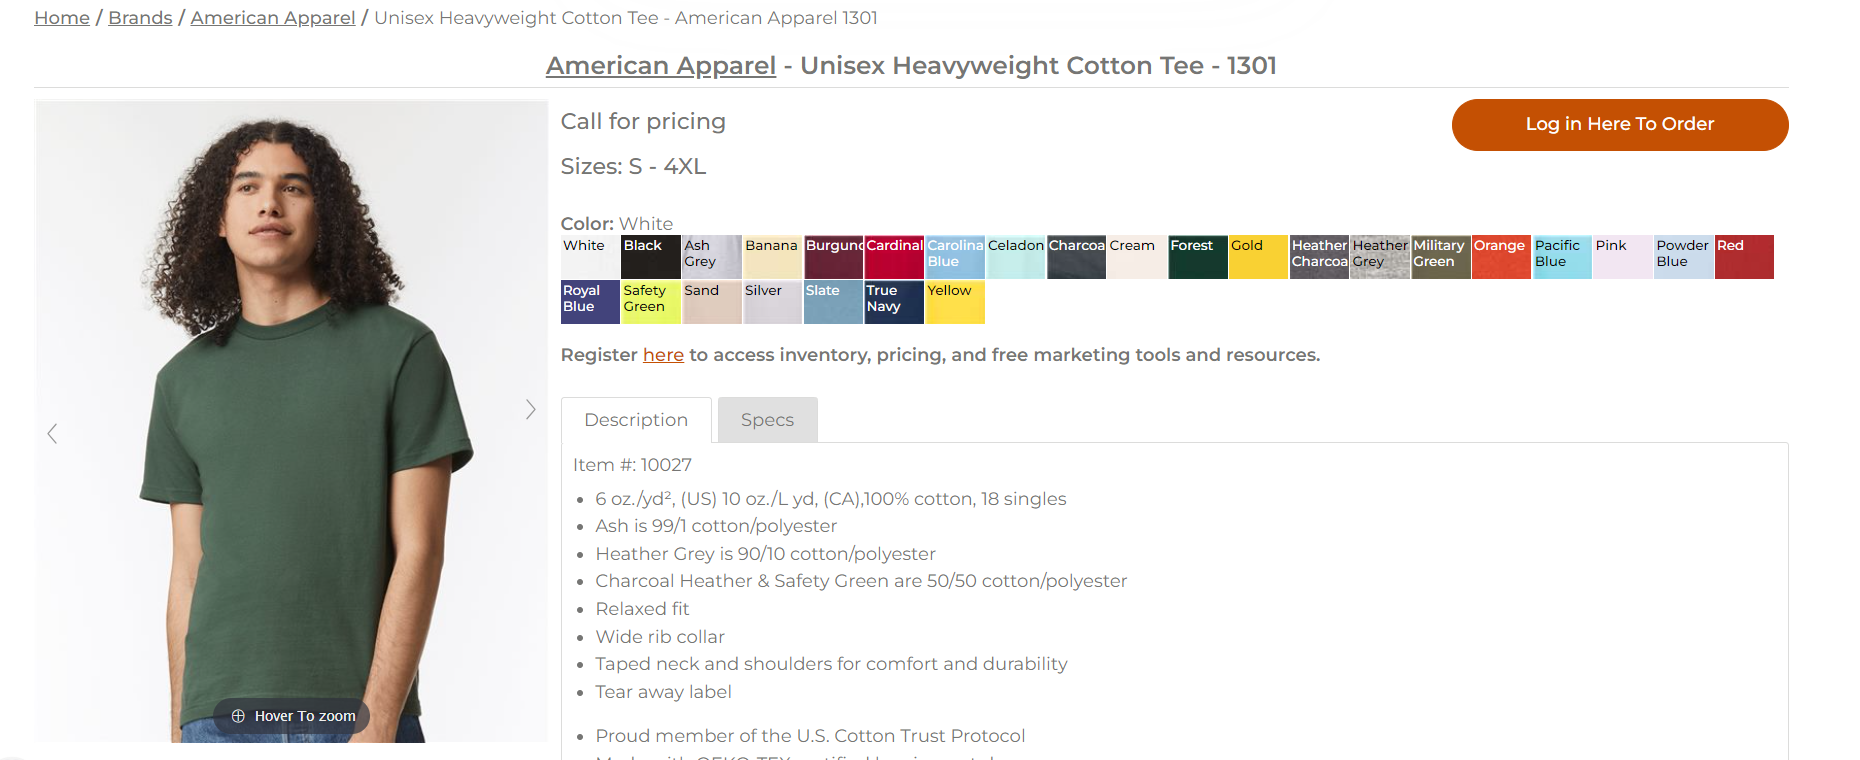 american apparel unisex heavyweight cotton tee 1301